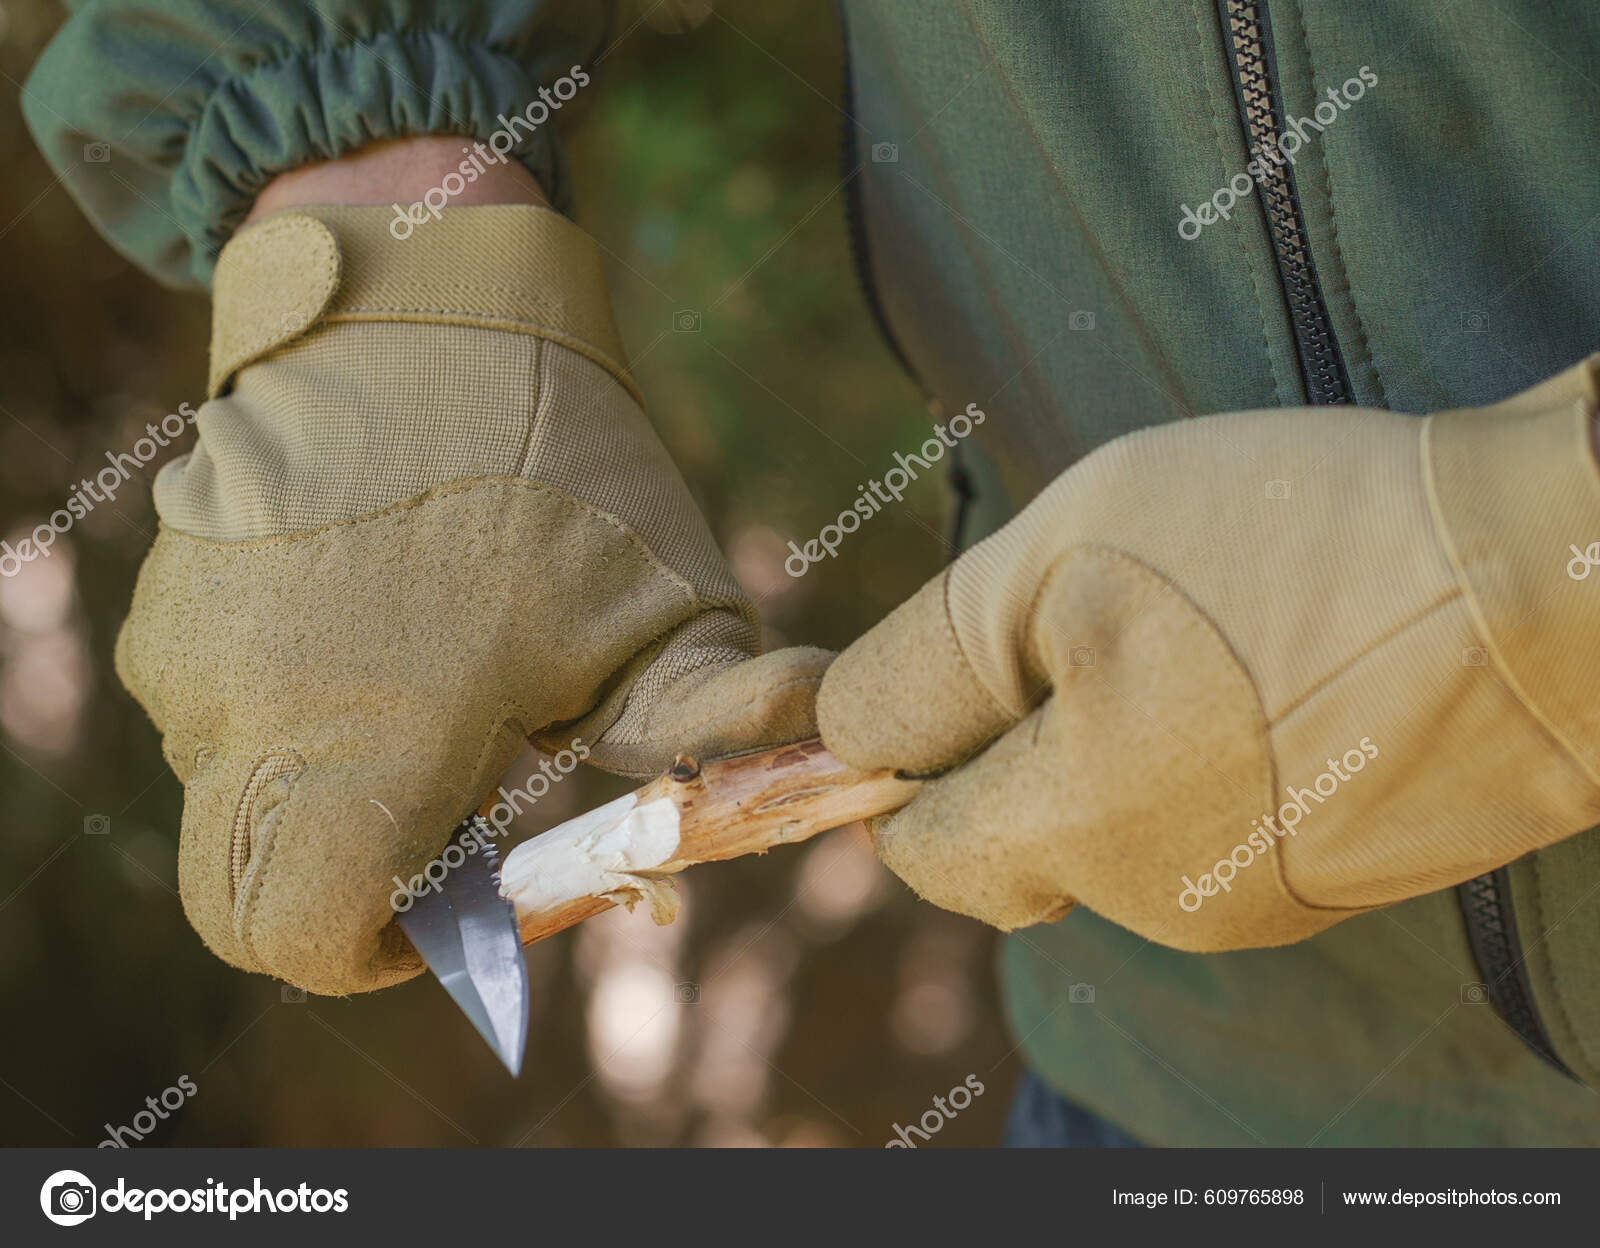 https://st.depositphotos.com/12036242/60976/i/1600/depositphotos_609765898-stock-photo-hunter-man-hands-tactical-gloves.jpg